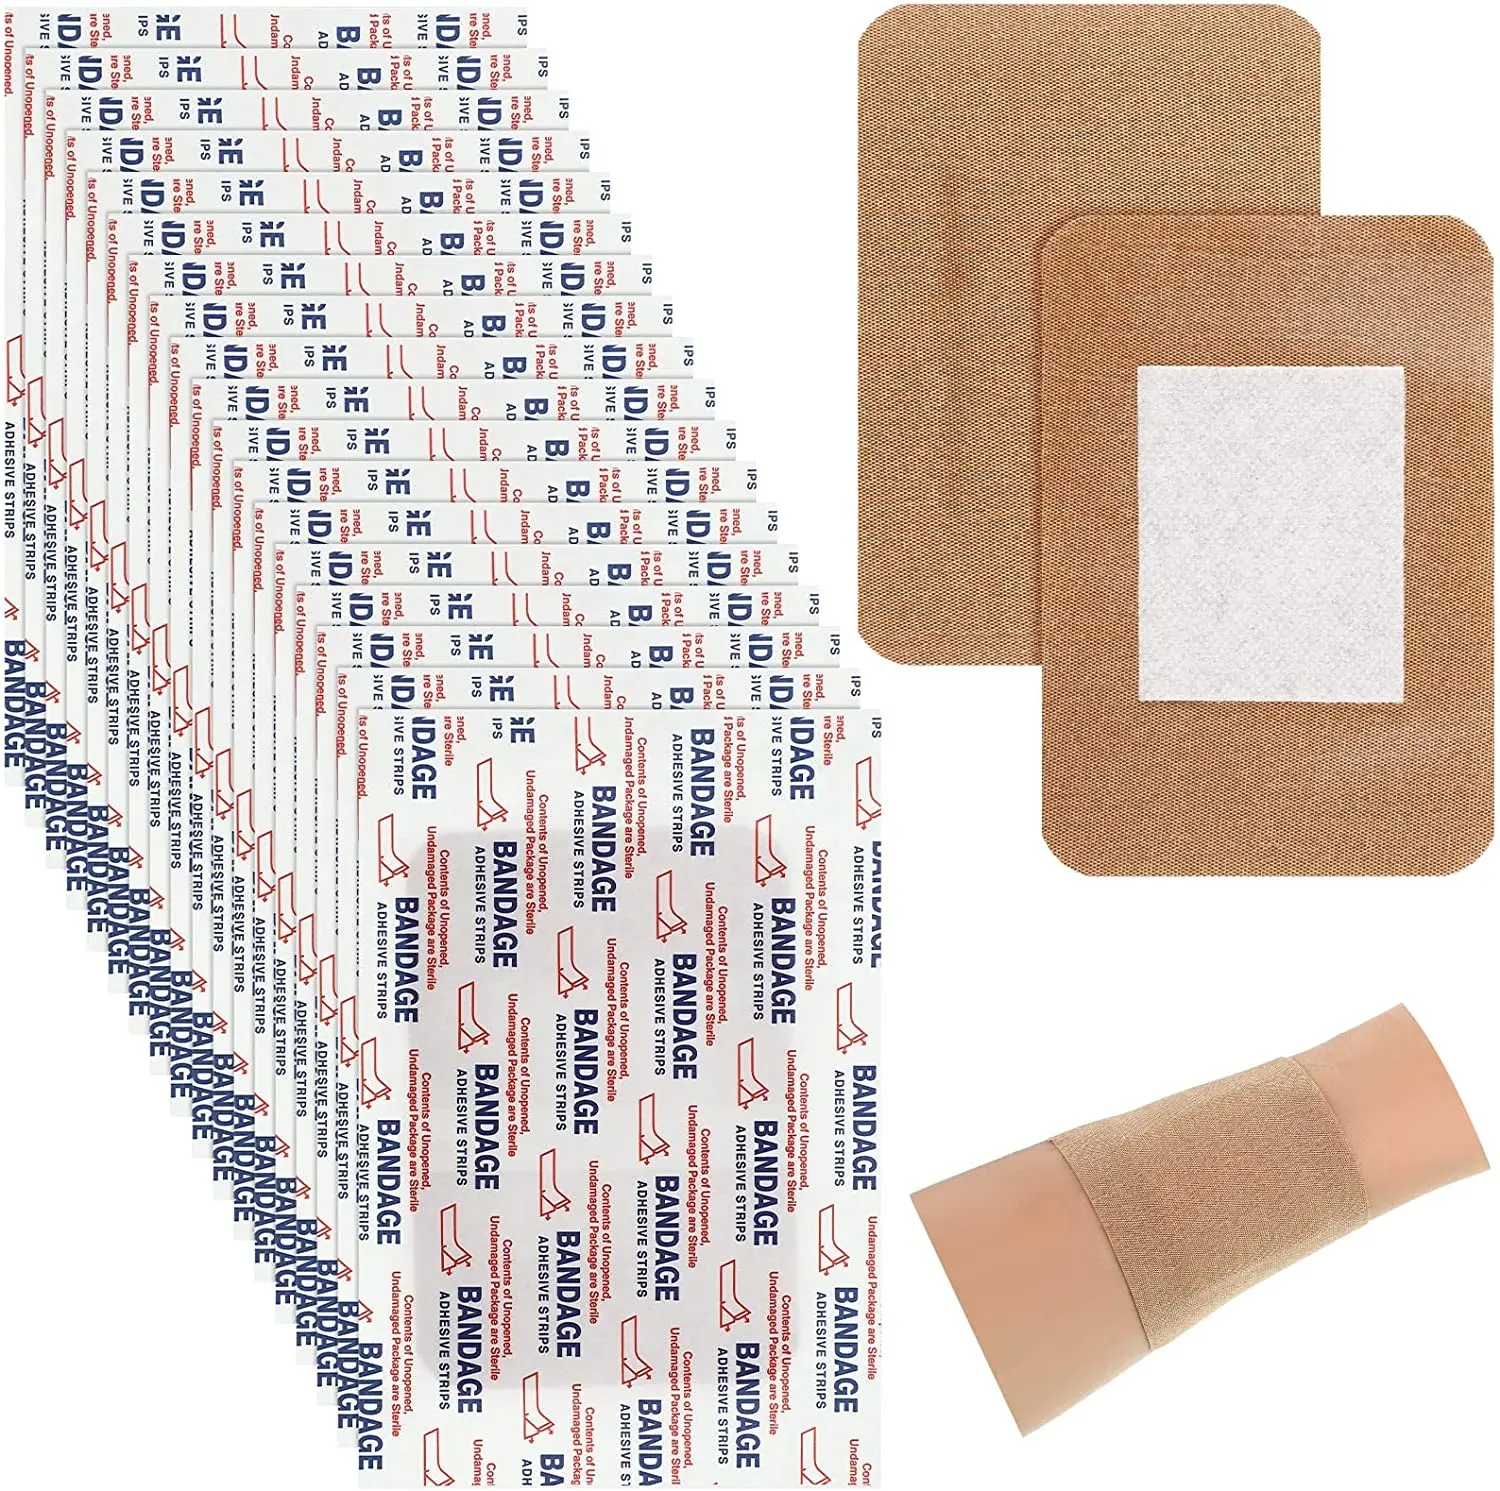 YOJO Latex freie Wund versorgung Erste Hilfe Große, flexible Stoff klebe bandagen